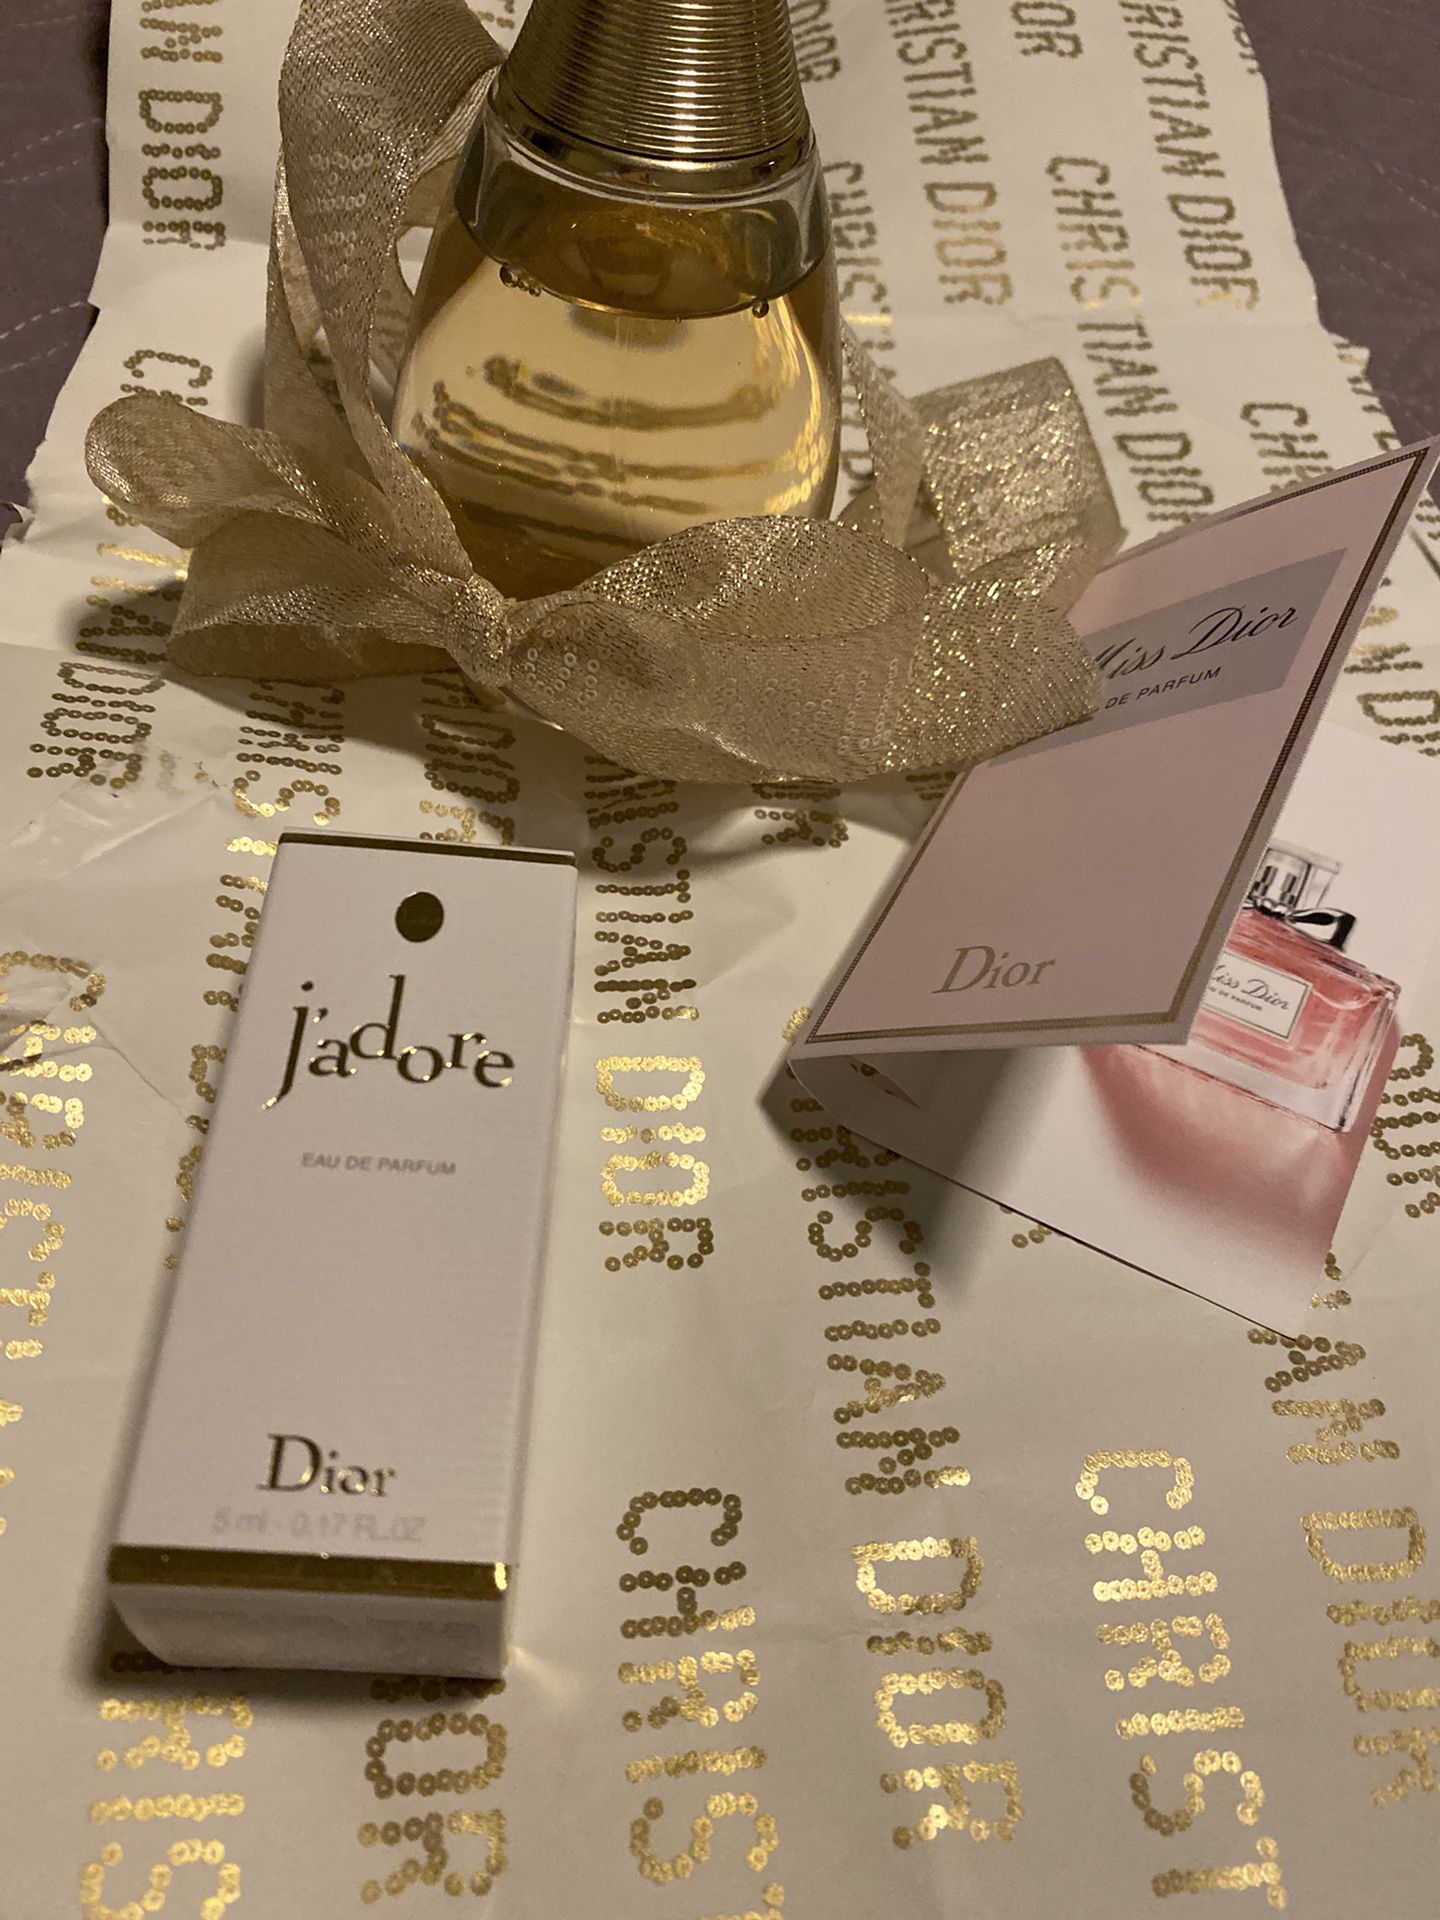 J’adore Dior perfume free samples